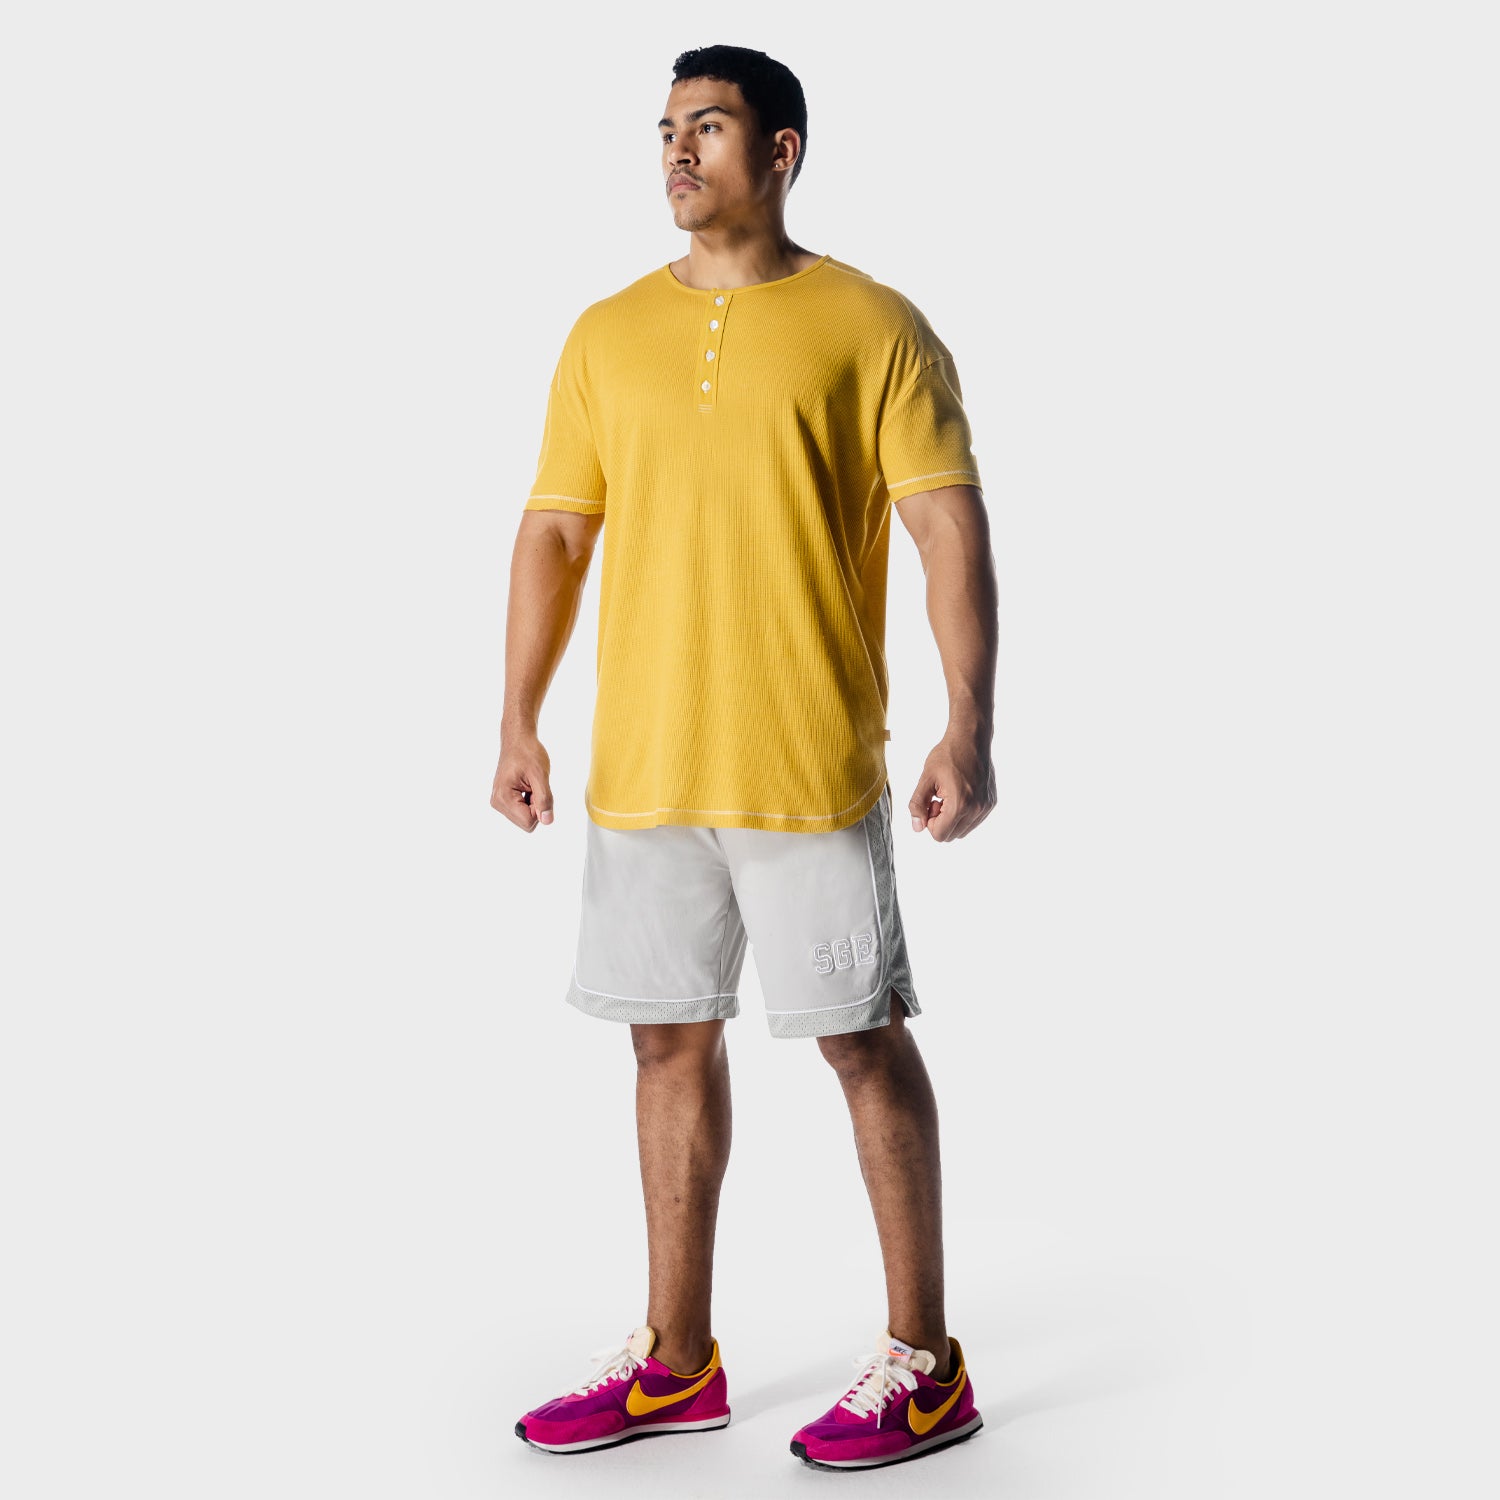 squatwolf-workout-shirts-golden-era-waffle-top-lemon-curry-gym-wear-for-men